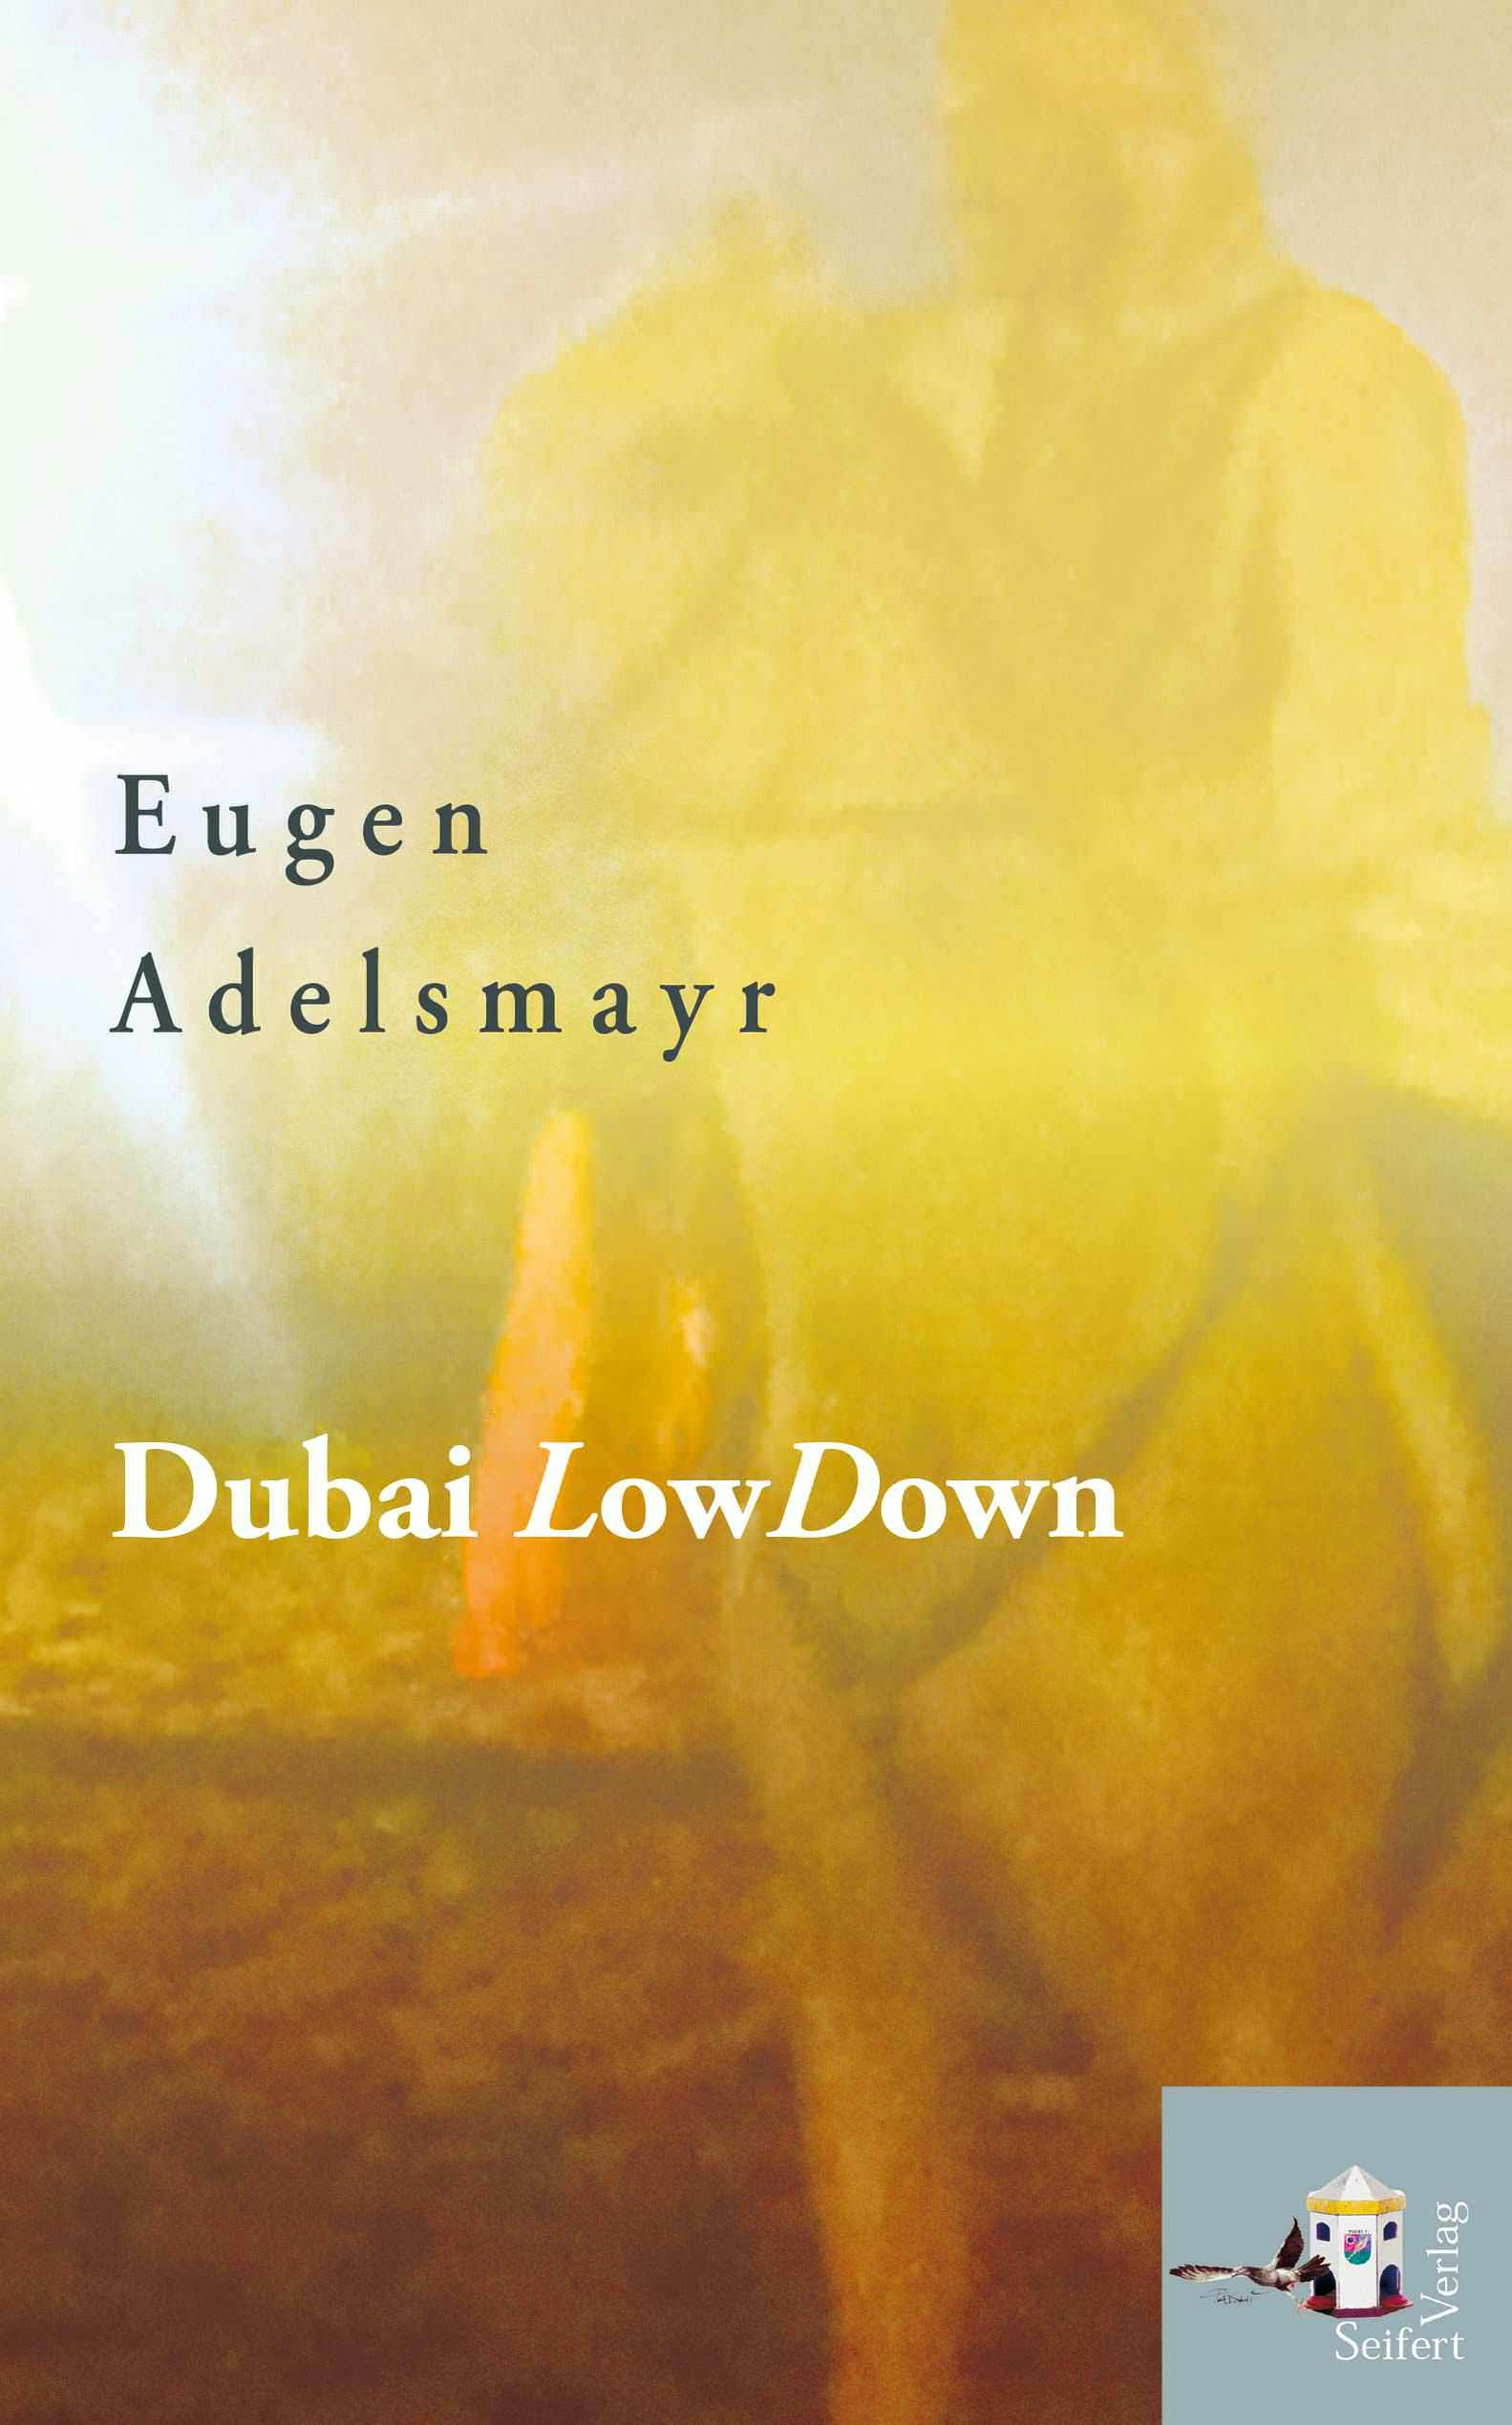 Dubai LowDown - Eugen Adelsmayr